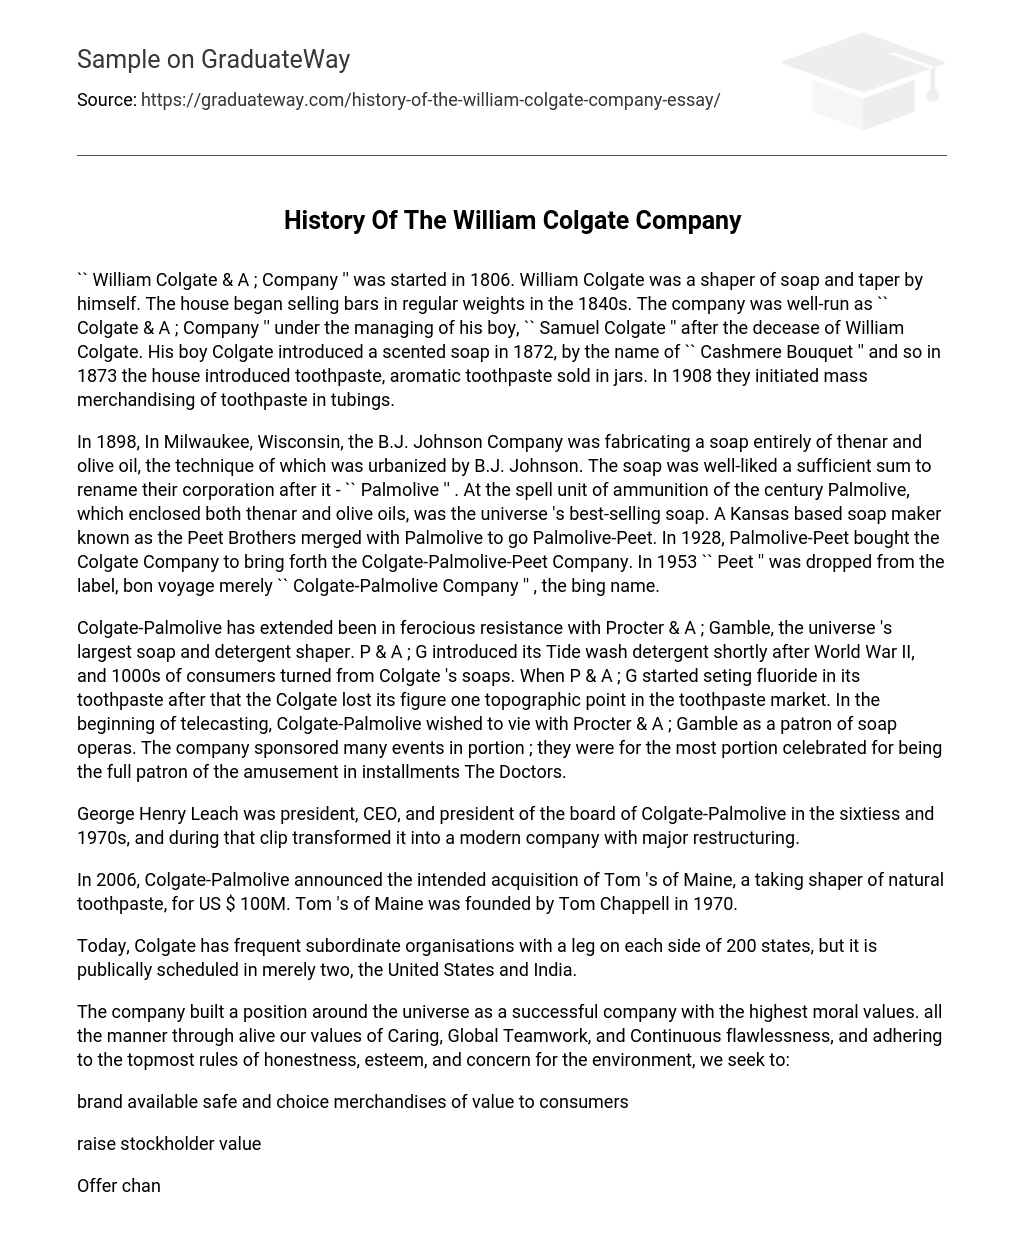 History Of The William Colgate Company